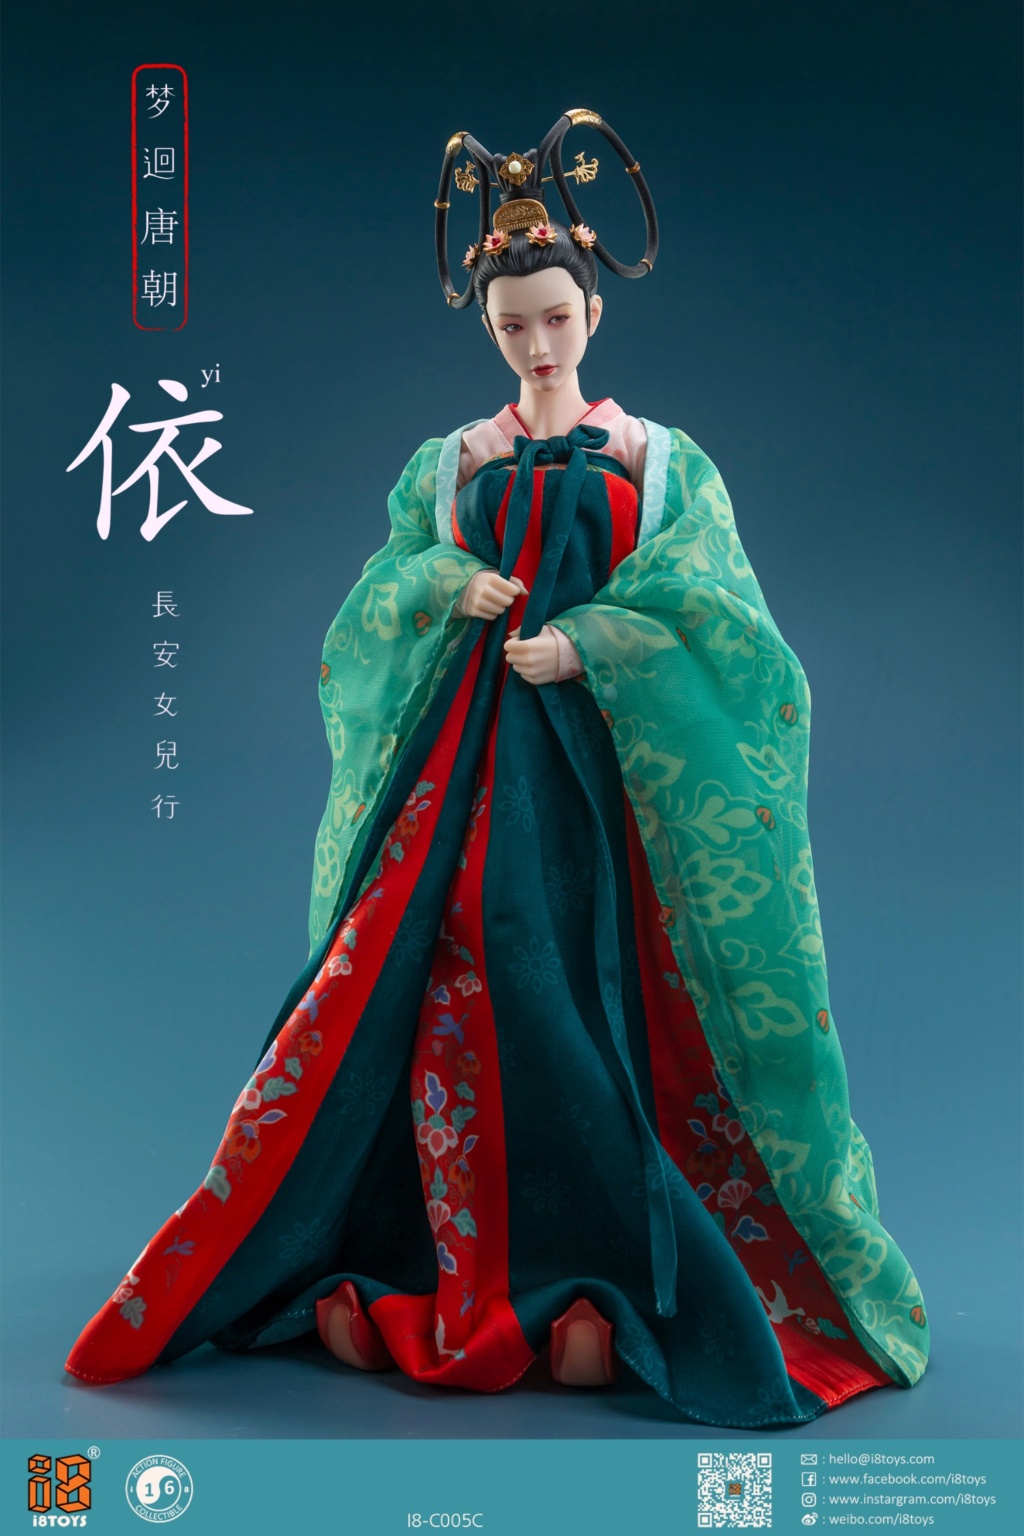 NEW PRODUCT: I8Toys: I8-C005 1/6 Scale Han Chinese Clothing sets 11450610